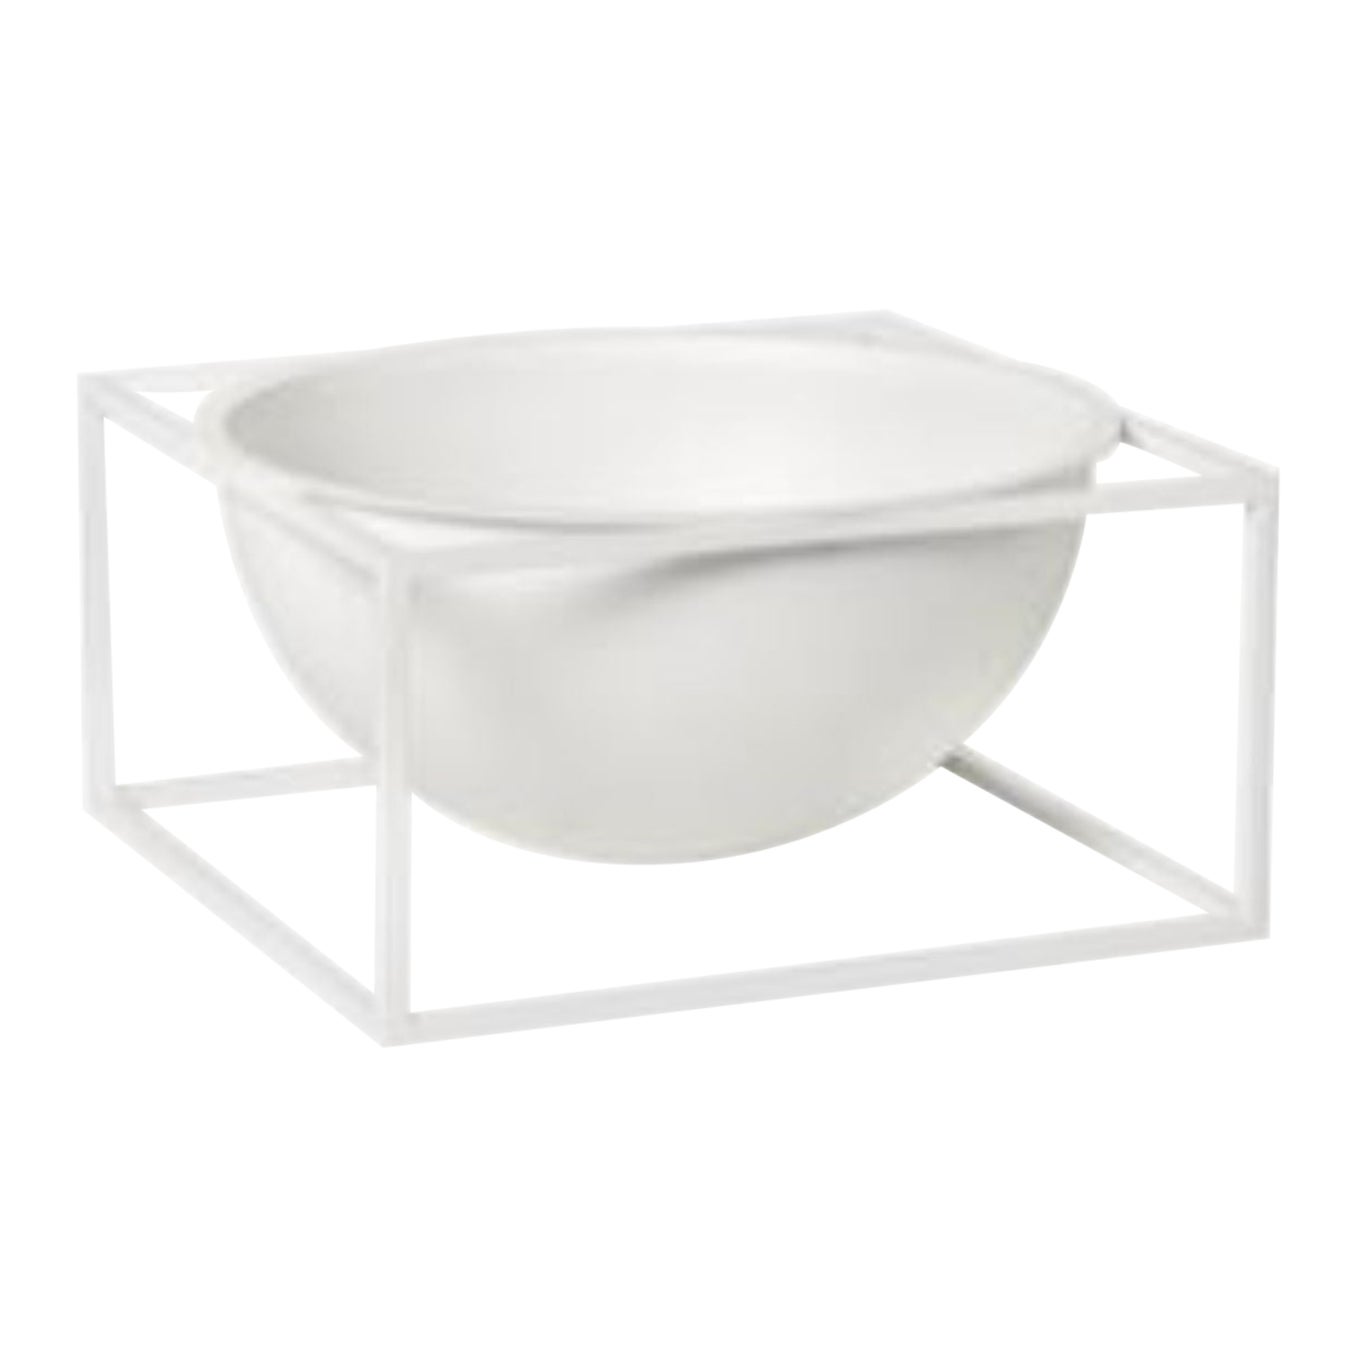 White Large Centerpiece Kubus Bowl by Lassen For Sale